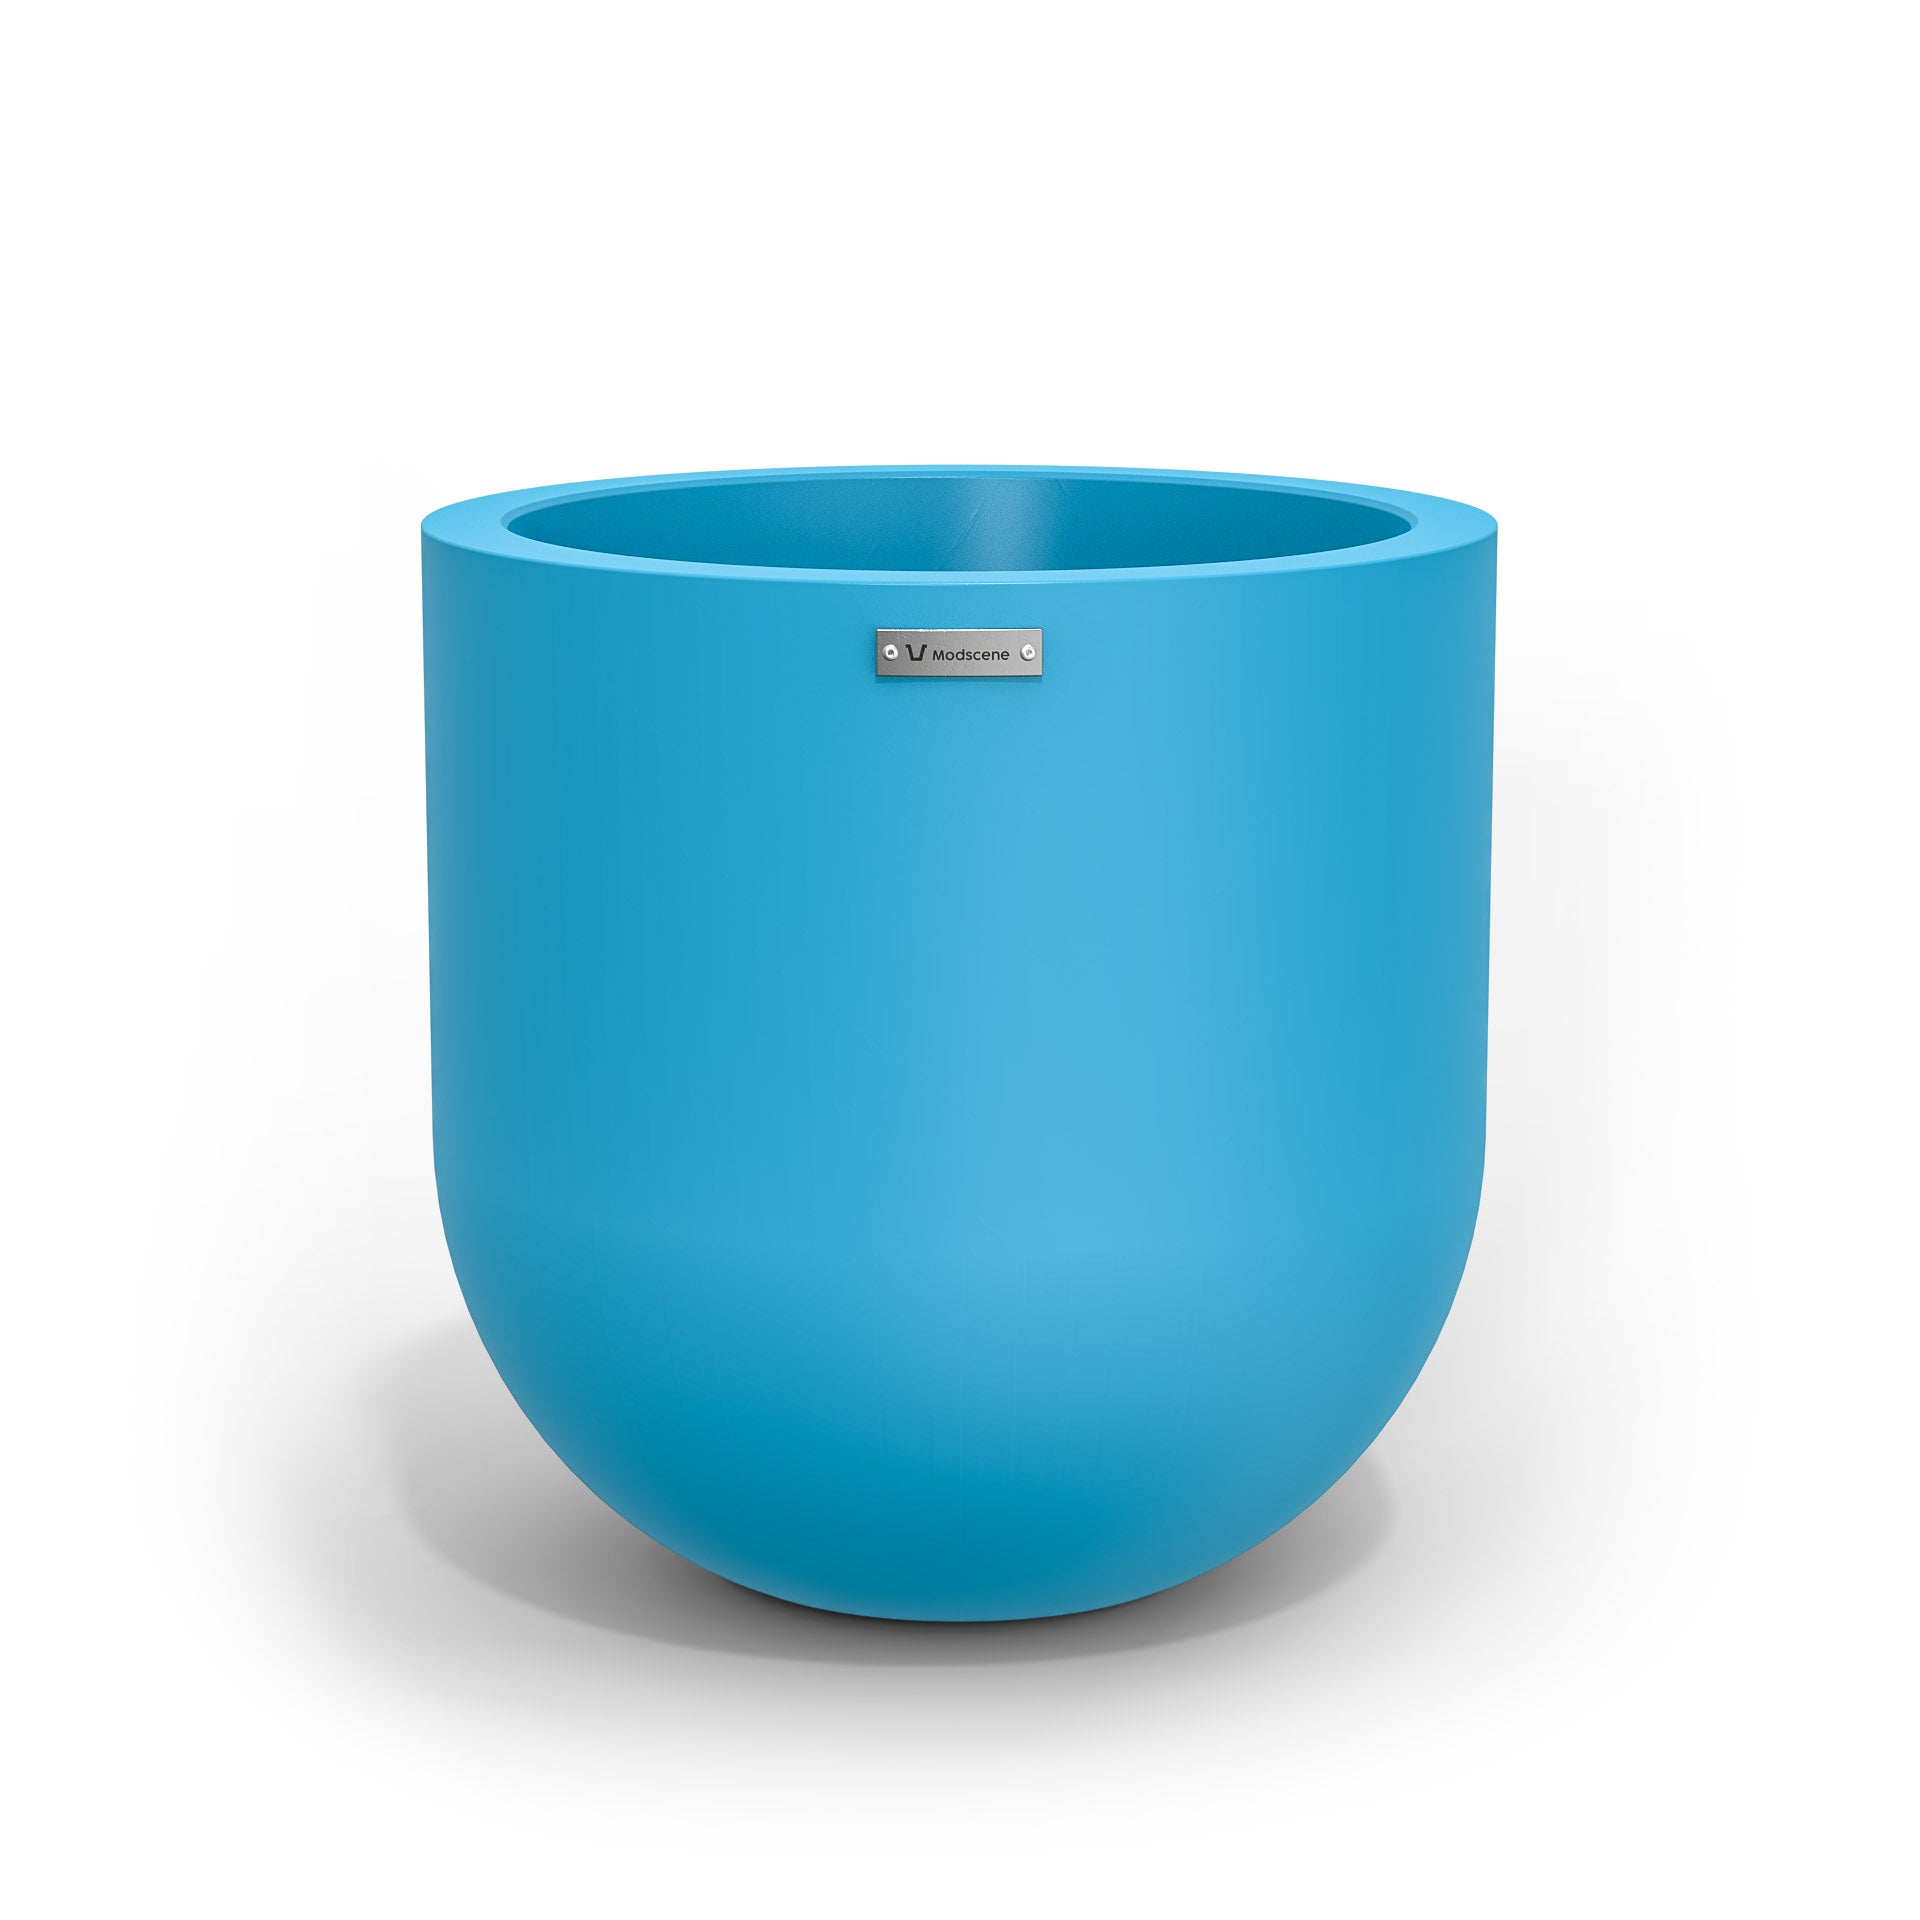 A medium sized blue planter pot made by Modscene.